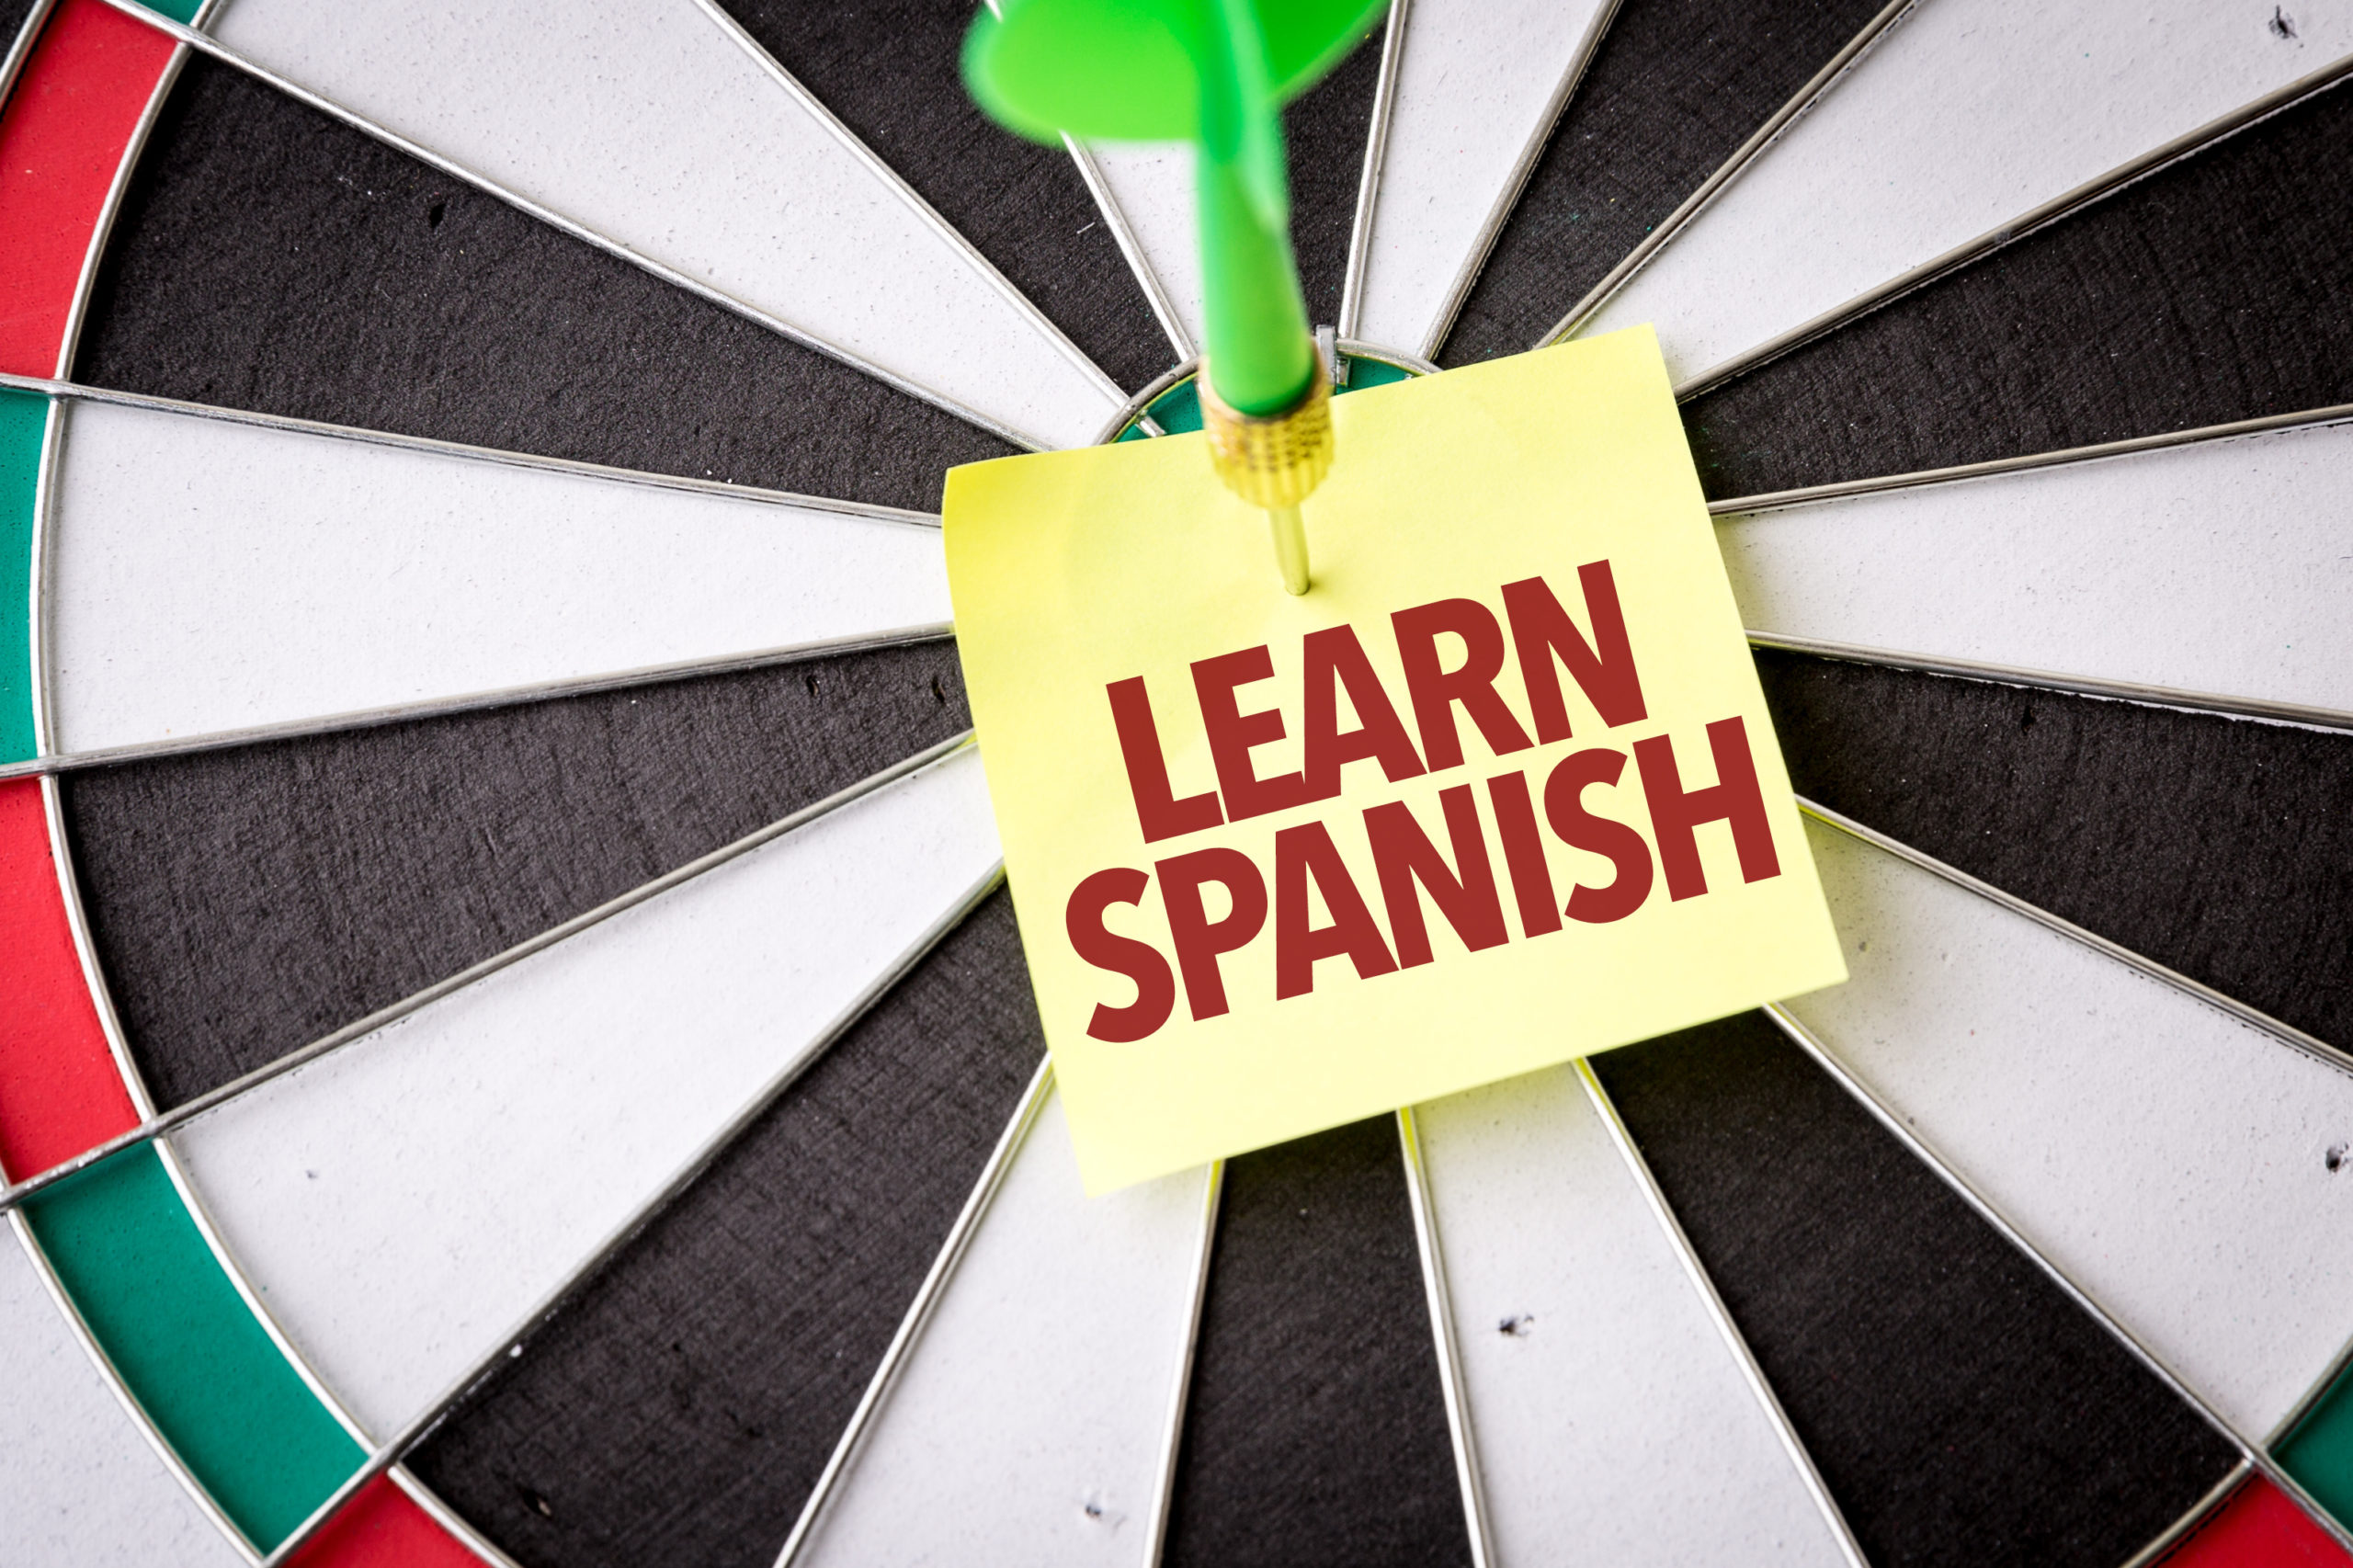 learn Spanish!